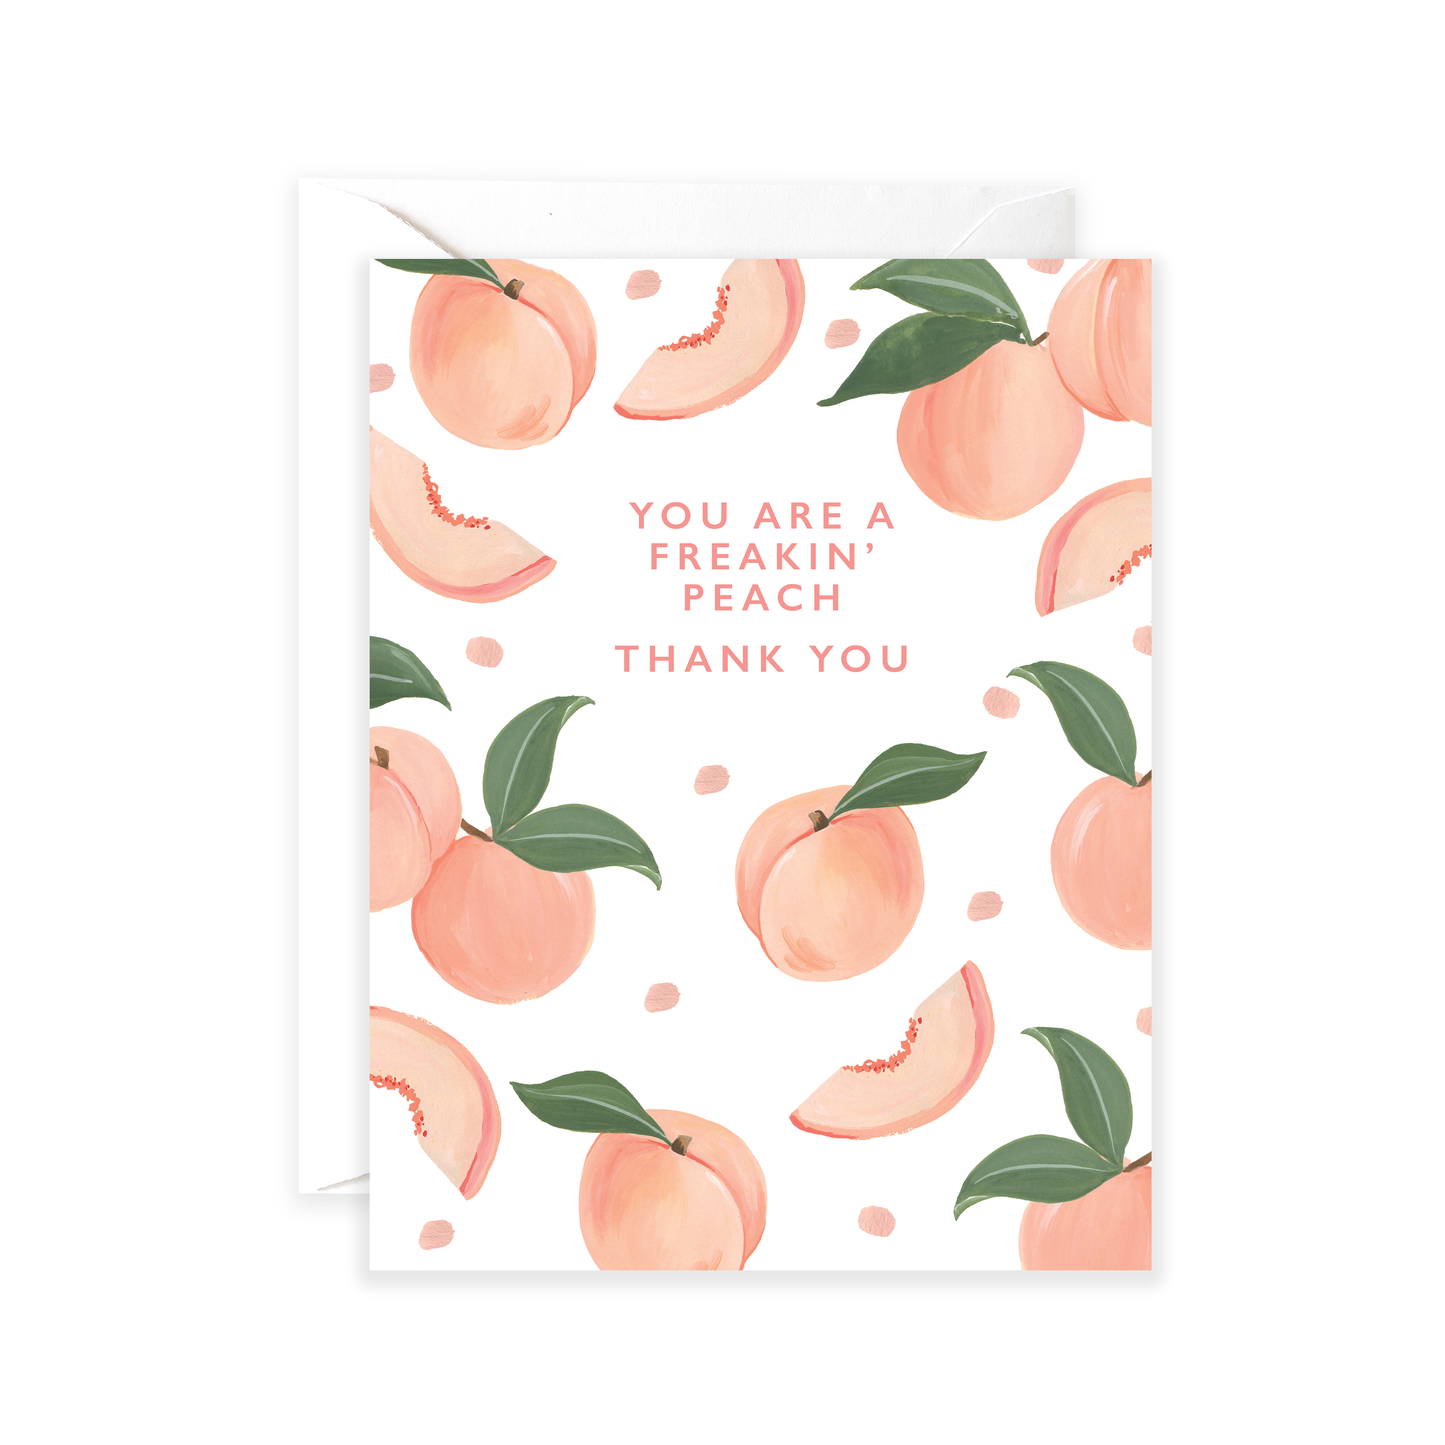 Freakin' Peach TY Greeting Card